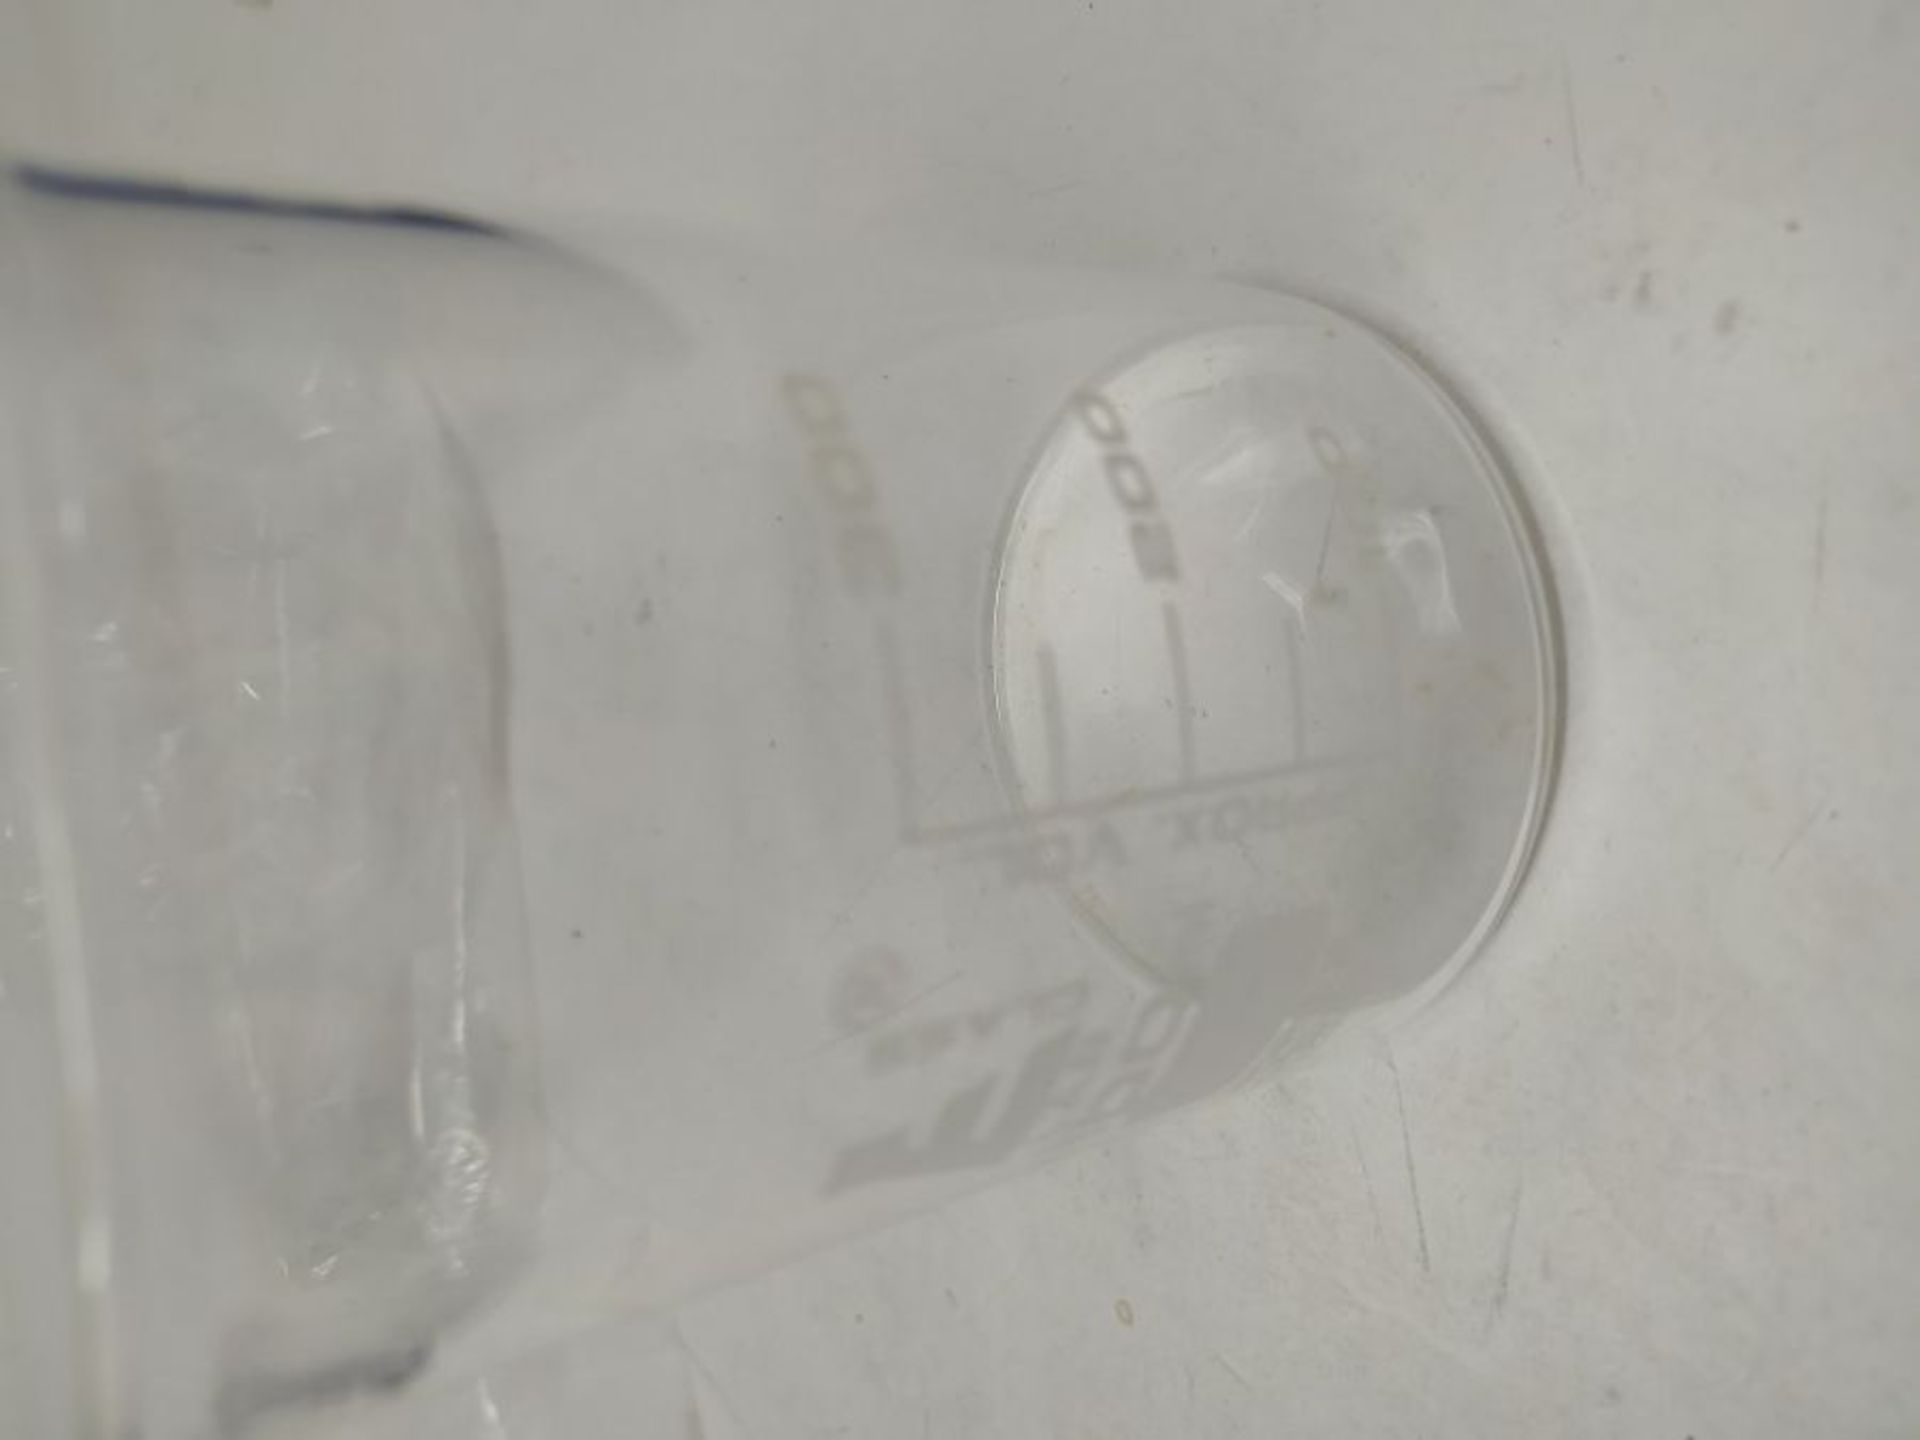 Edu-Lab BK0108 Borosilicate Glass Squat Form Beaker, 400 ml Capacity - Image 2 of 2